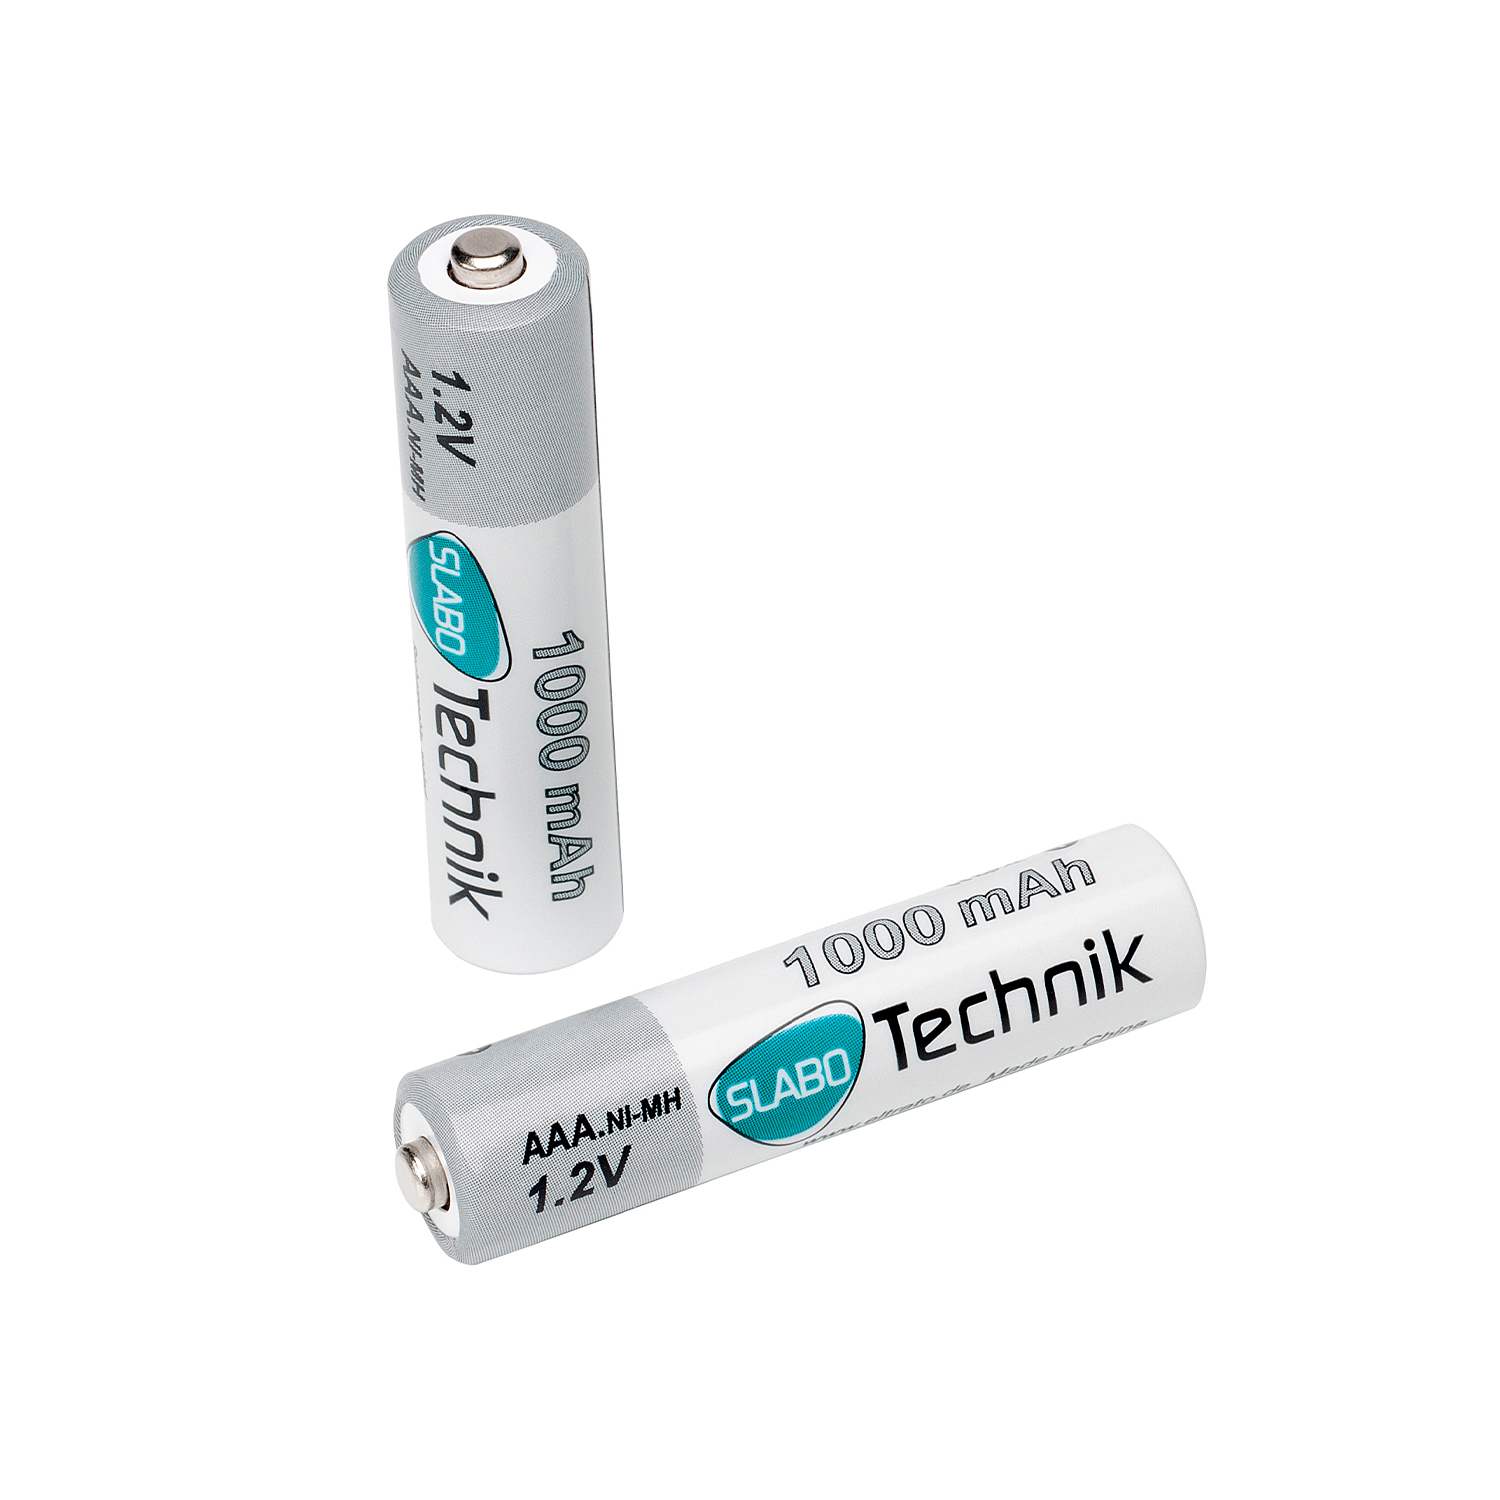 SLABO Ni-MH Akku Batterie wiederaufladbar - Batterien Akku wiederaufladbar AAA Batterien Micro 1.2V Ni-MH Micro / 1000mAh 12er-Pack AAA